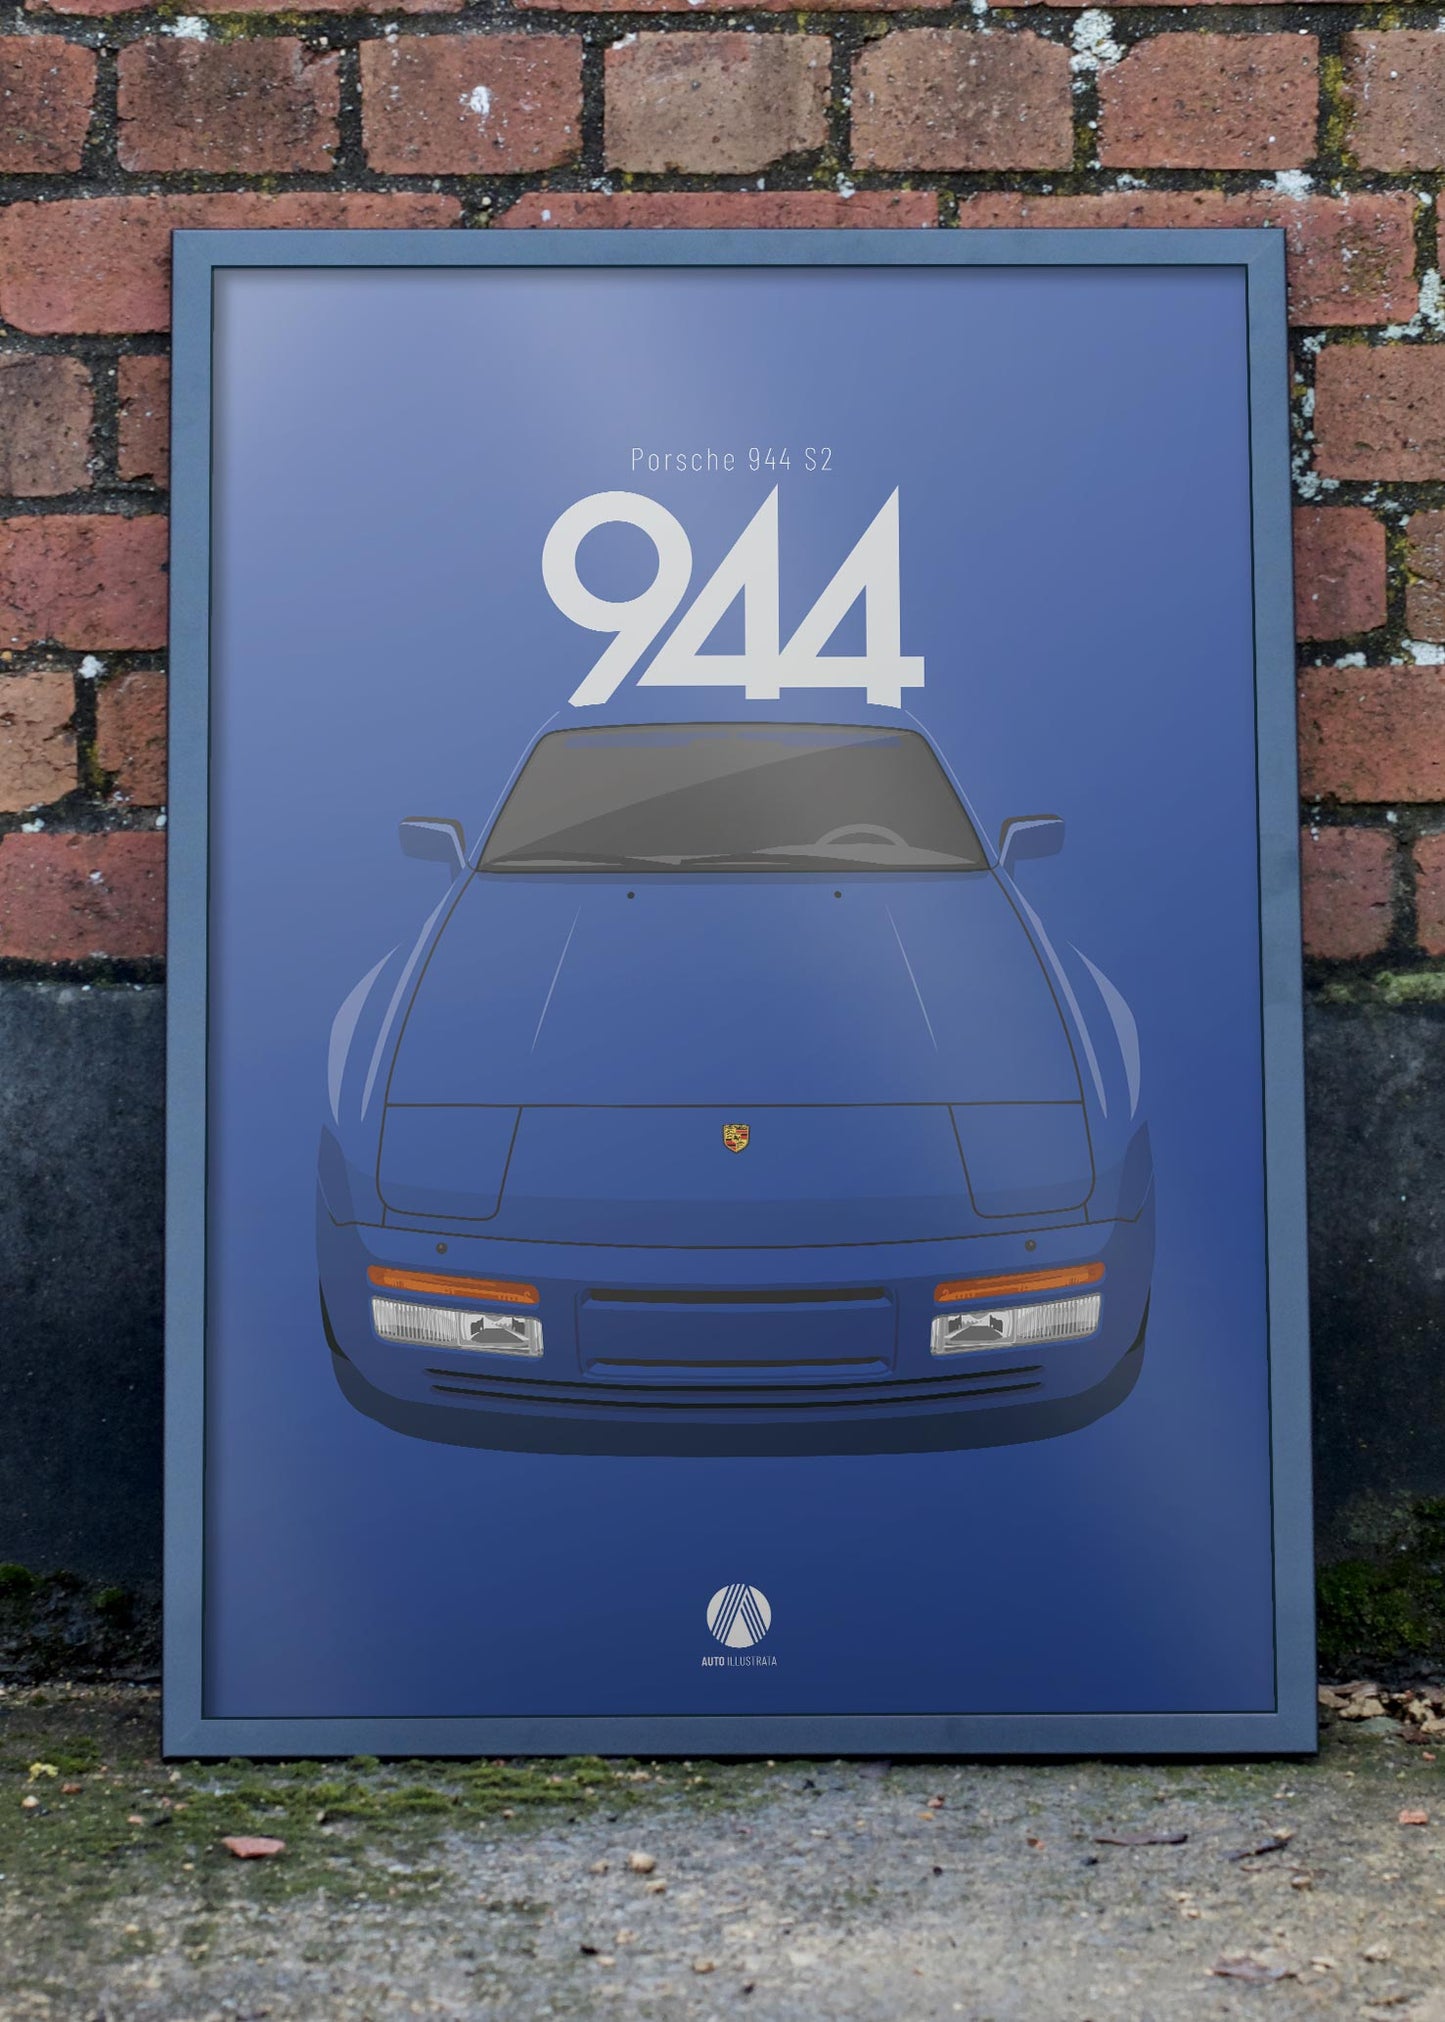 1991 Porsche 944 S2 - LM5N Cobaltblau - poster print